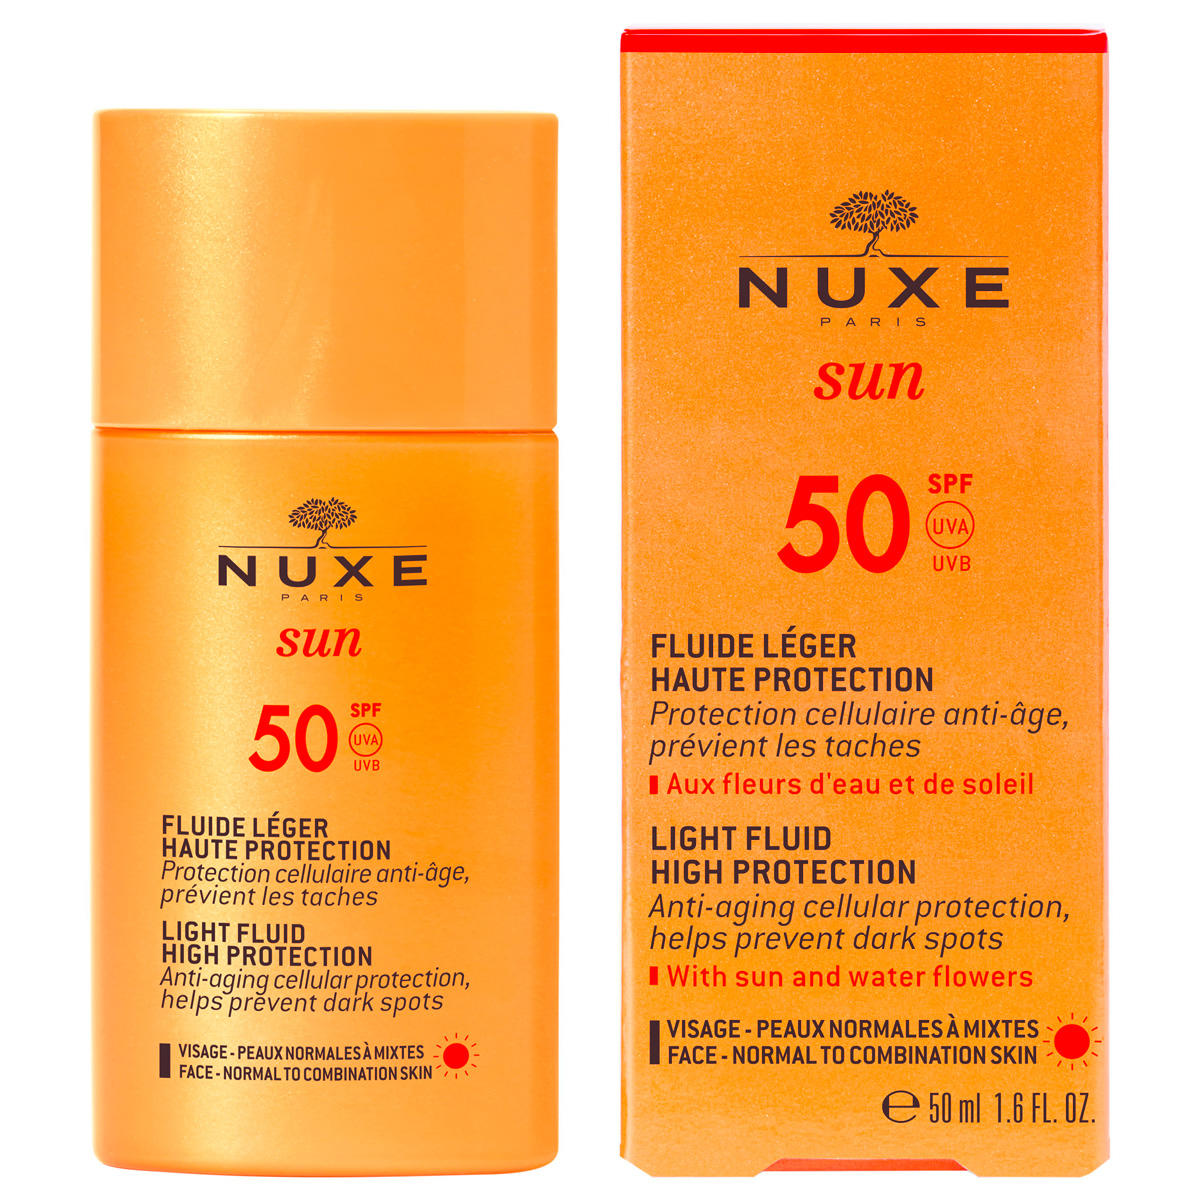 NUXE Sun Fluide léger haute protection SPF 50 50 ml - 2